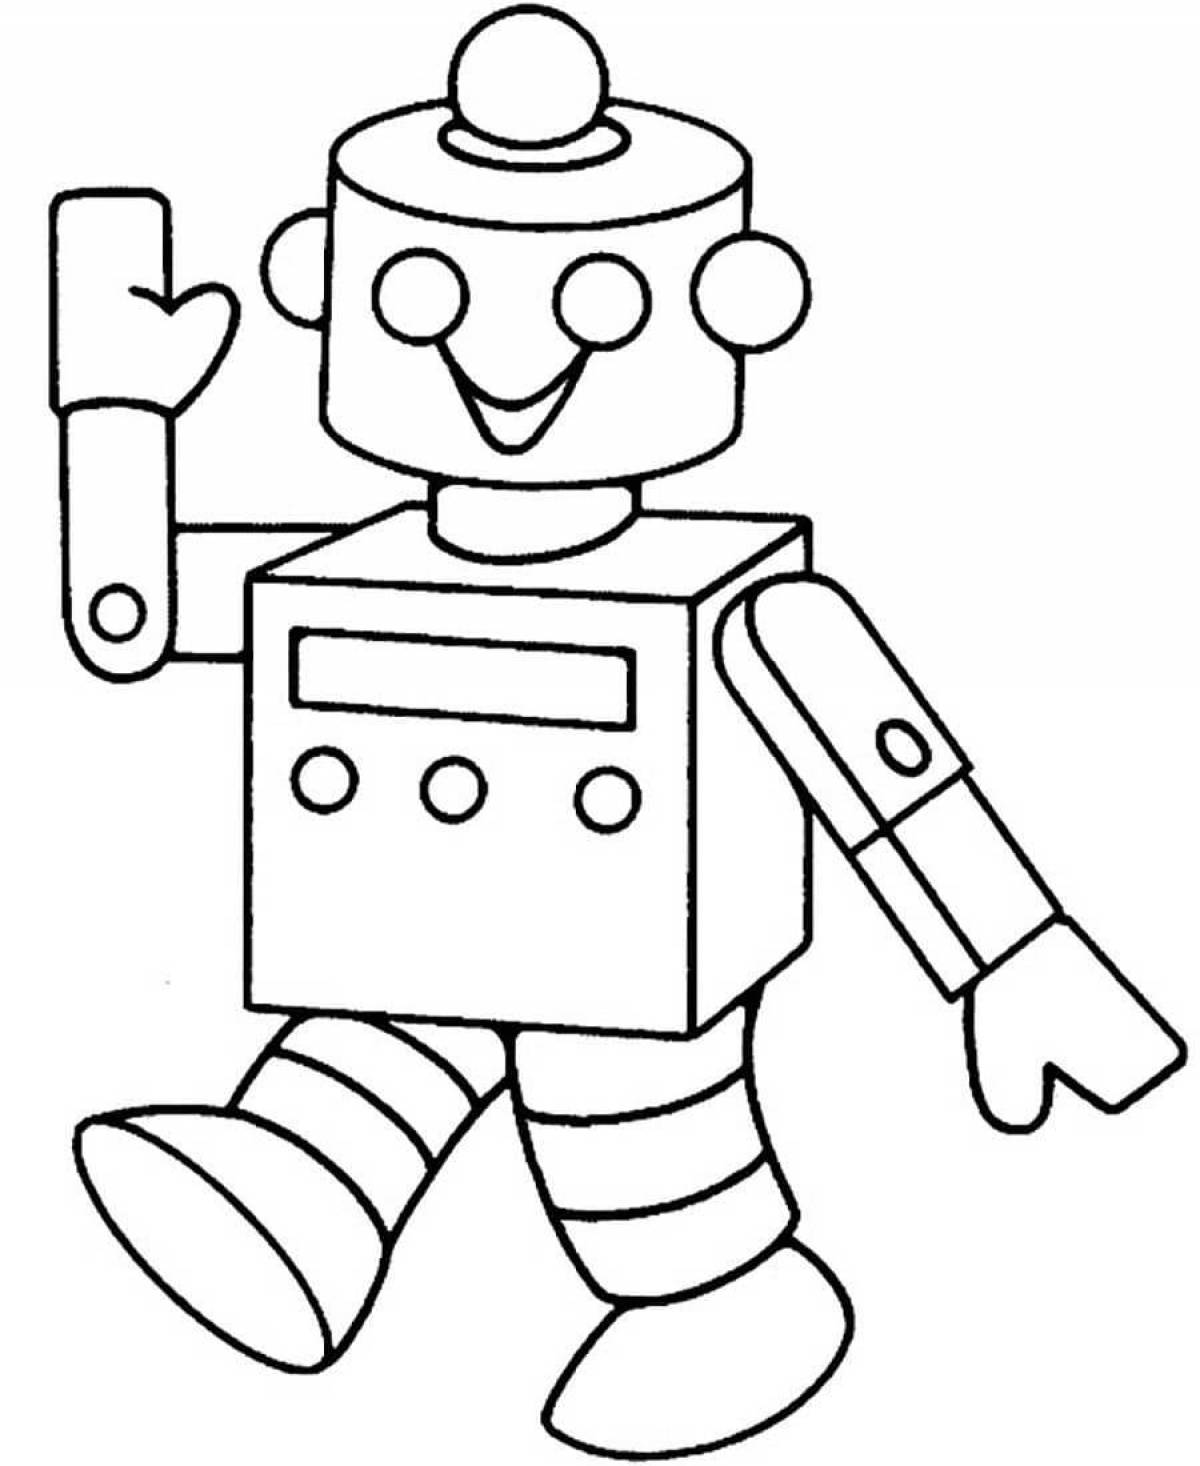 Joyful robot coloring book for kids